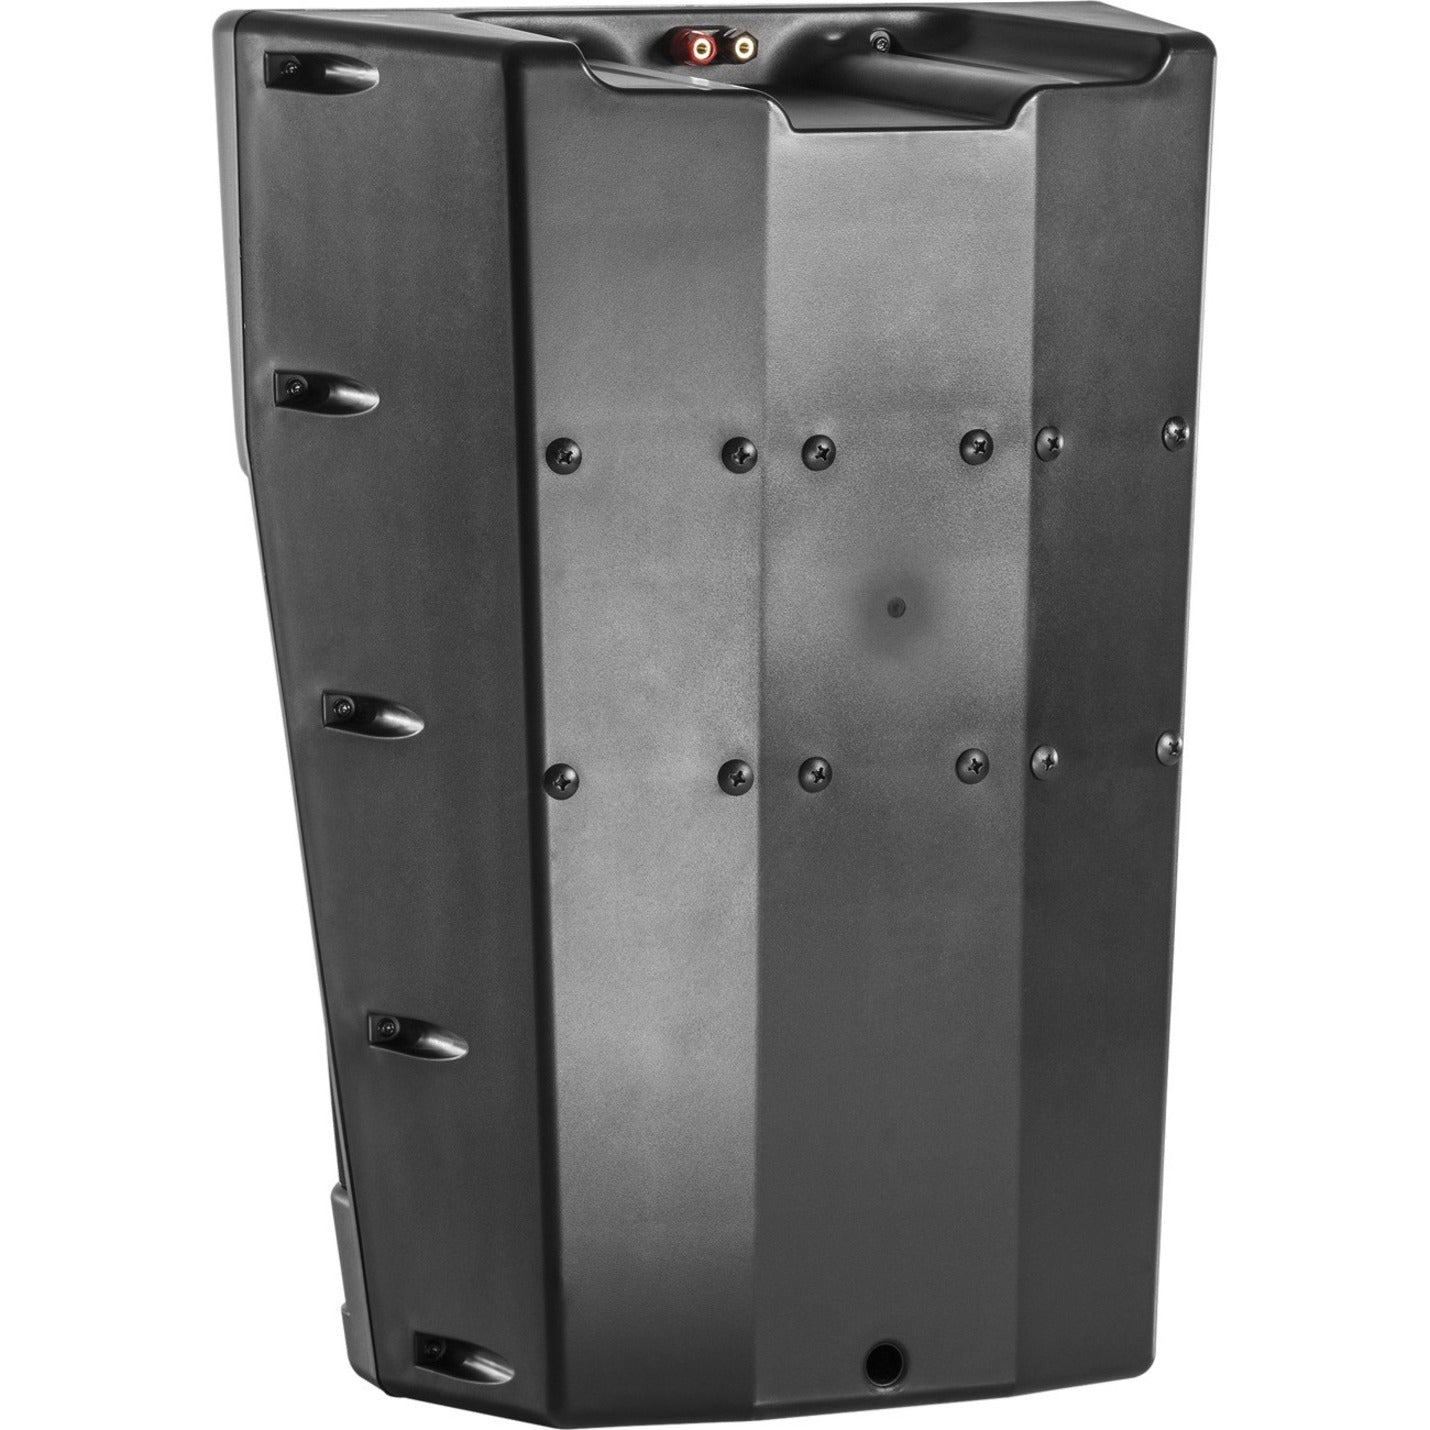 JBL Professional 2-way Wall Mountable Speaker - Black